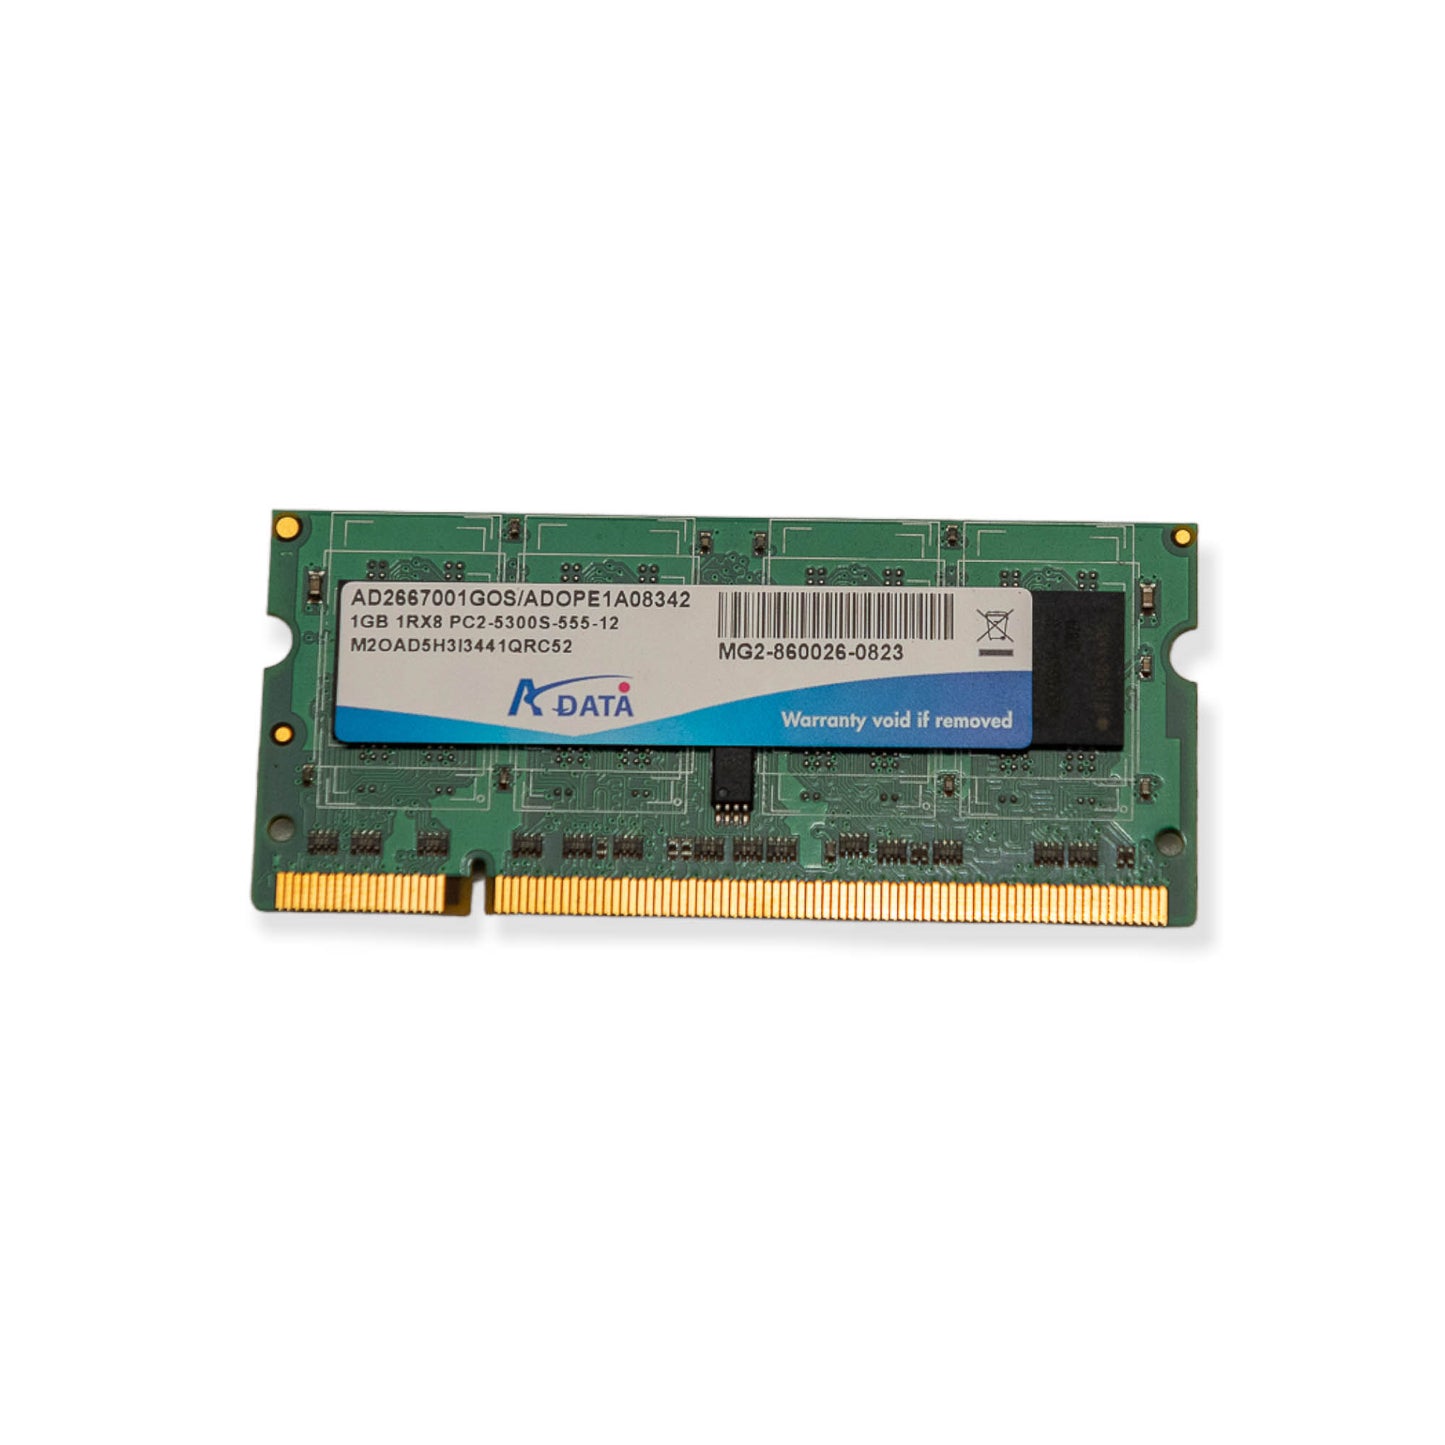 Memória Ram ADATA DDR2 1GB 5300S AD2667001GOS/ADOPE1A08342